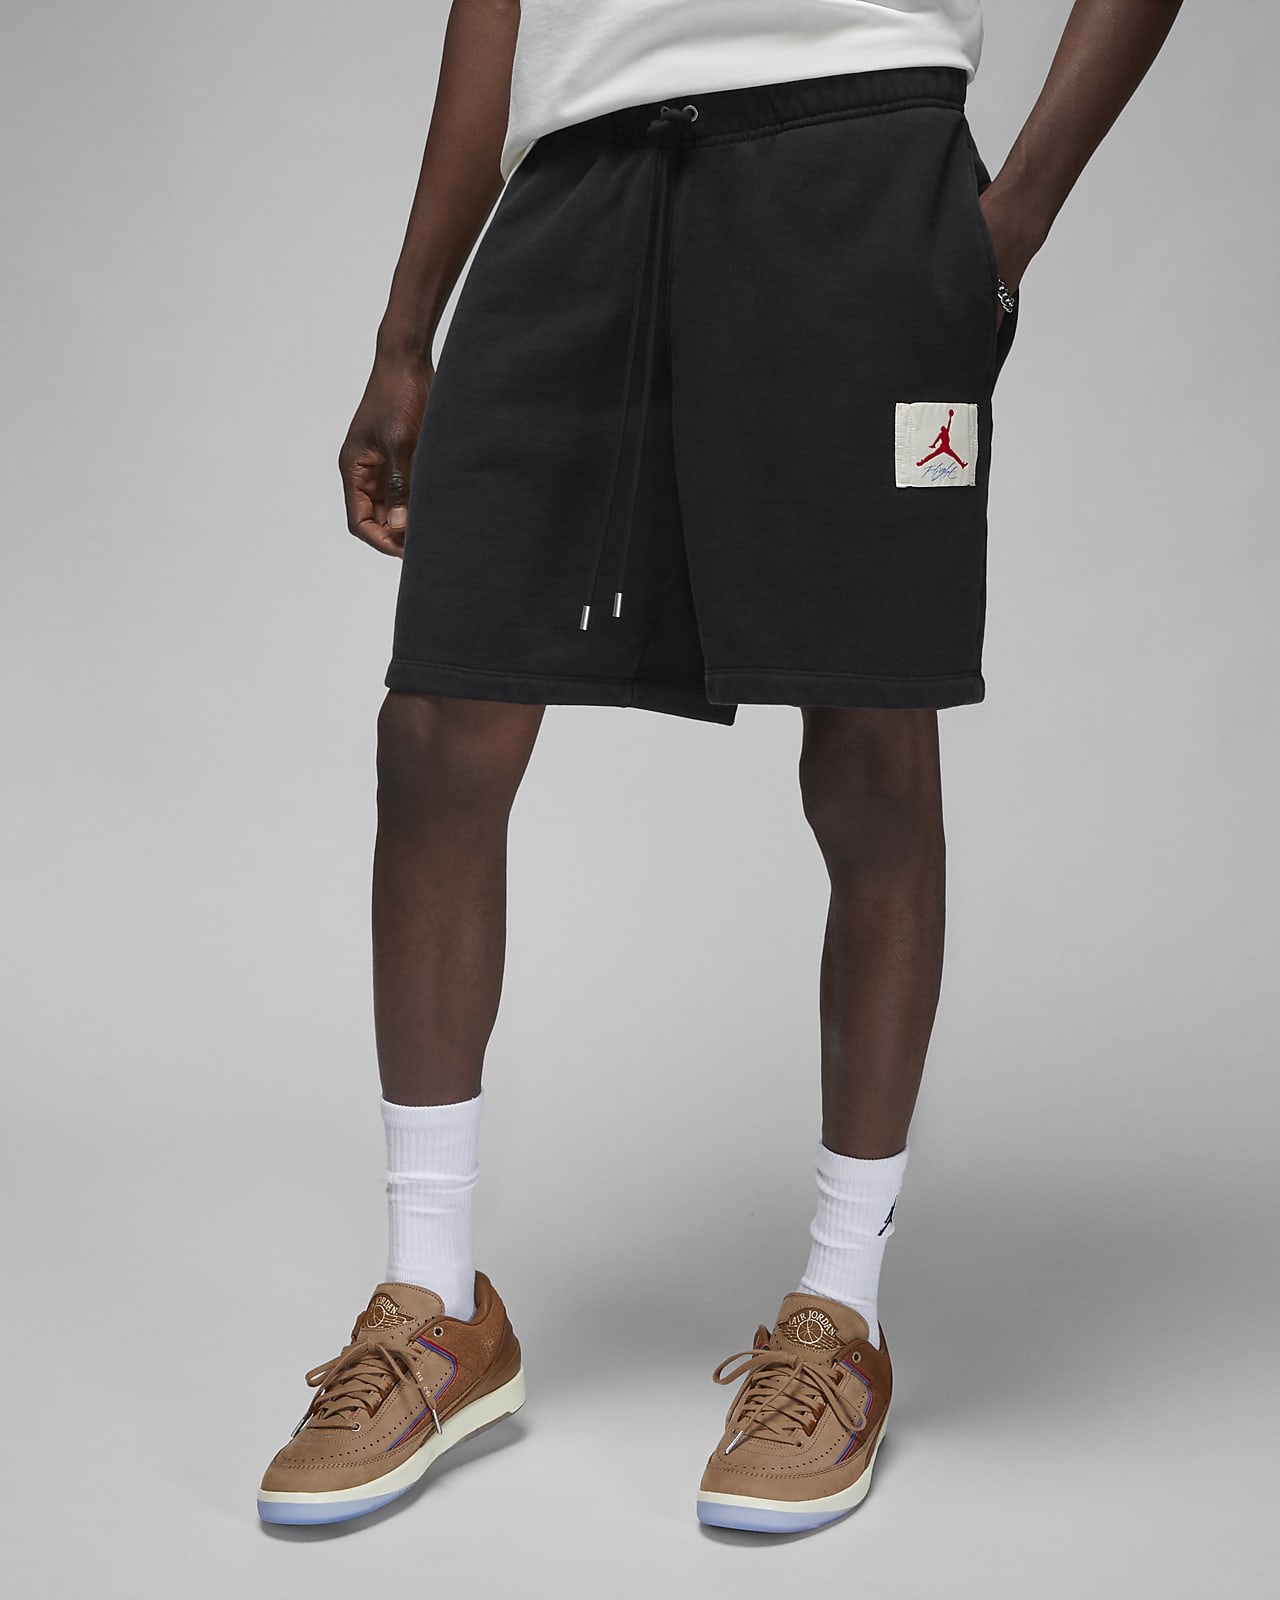 Air Jordan x Two18 男子短裤